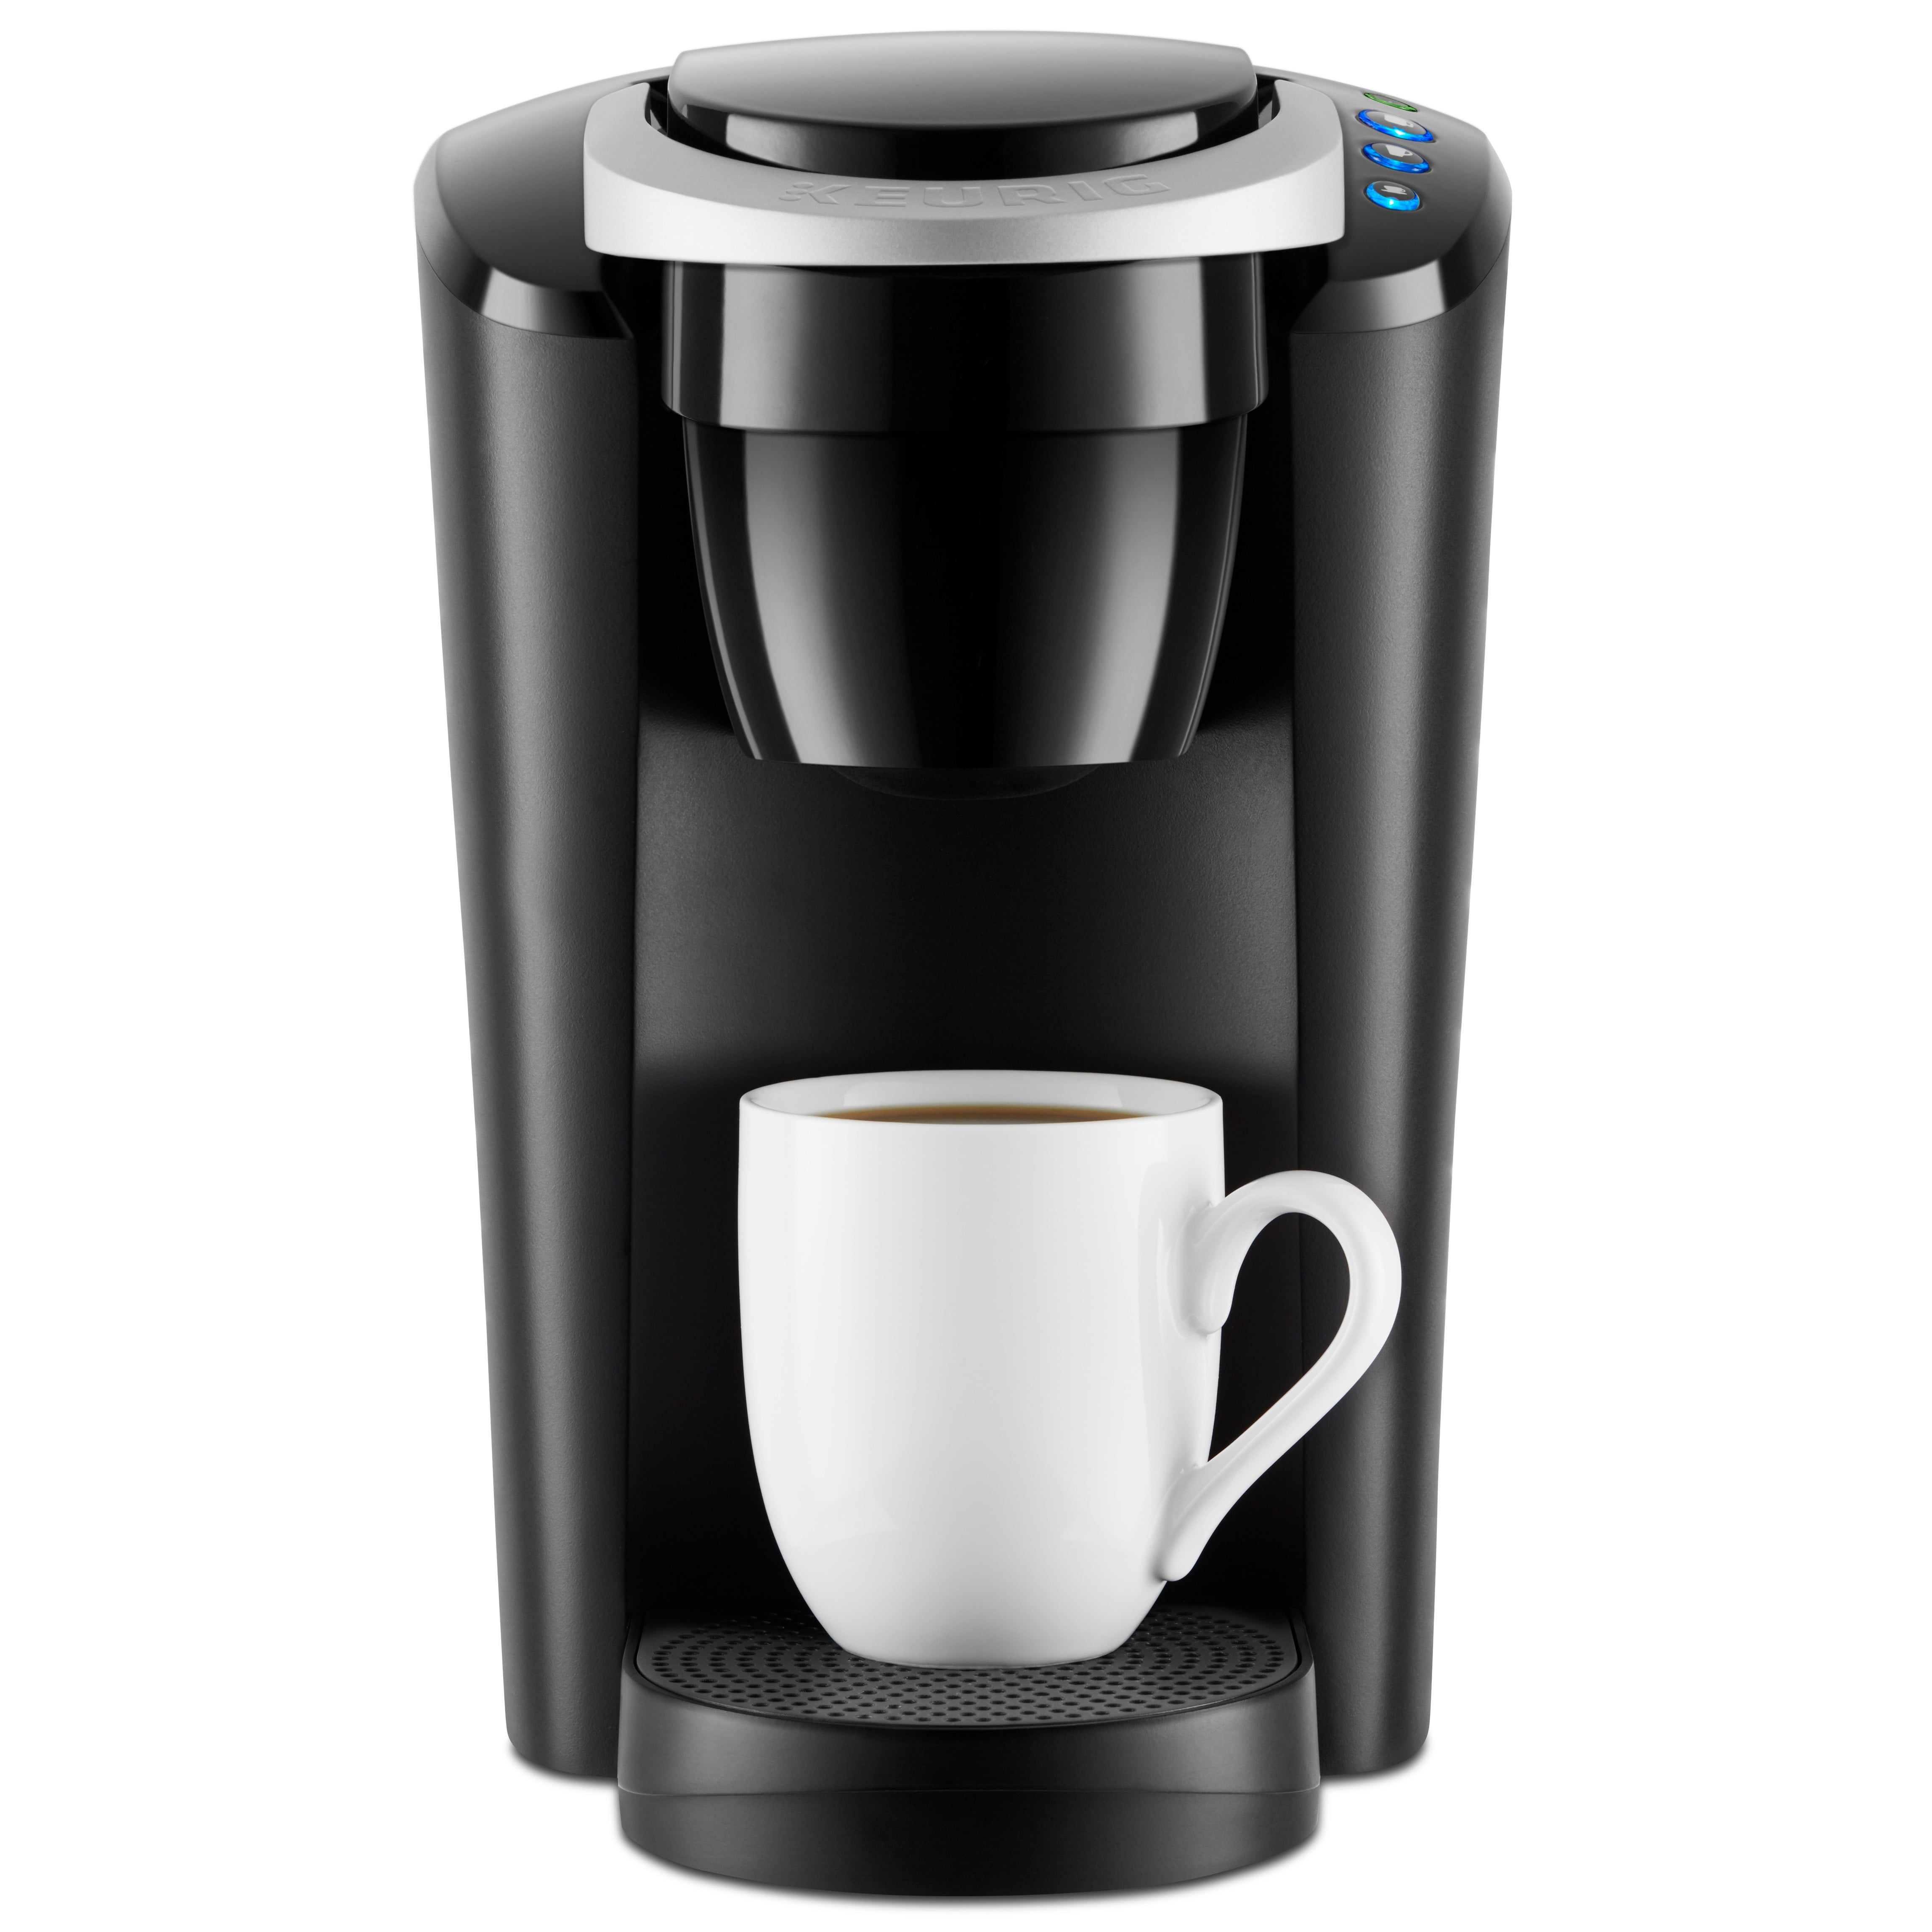 Keurig Special Edition B60 Single Cup Coffee Espresso Maker for sale online